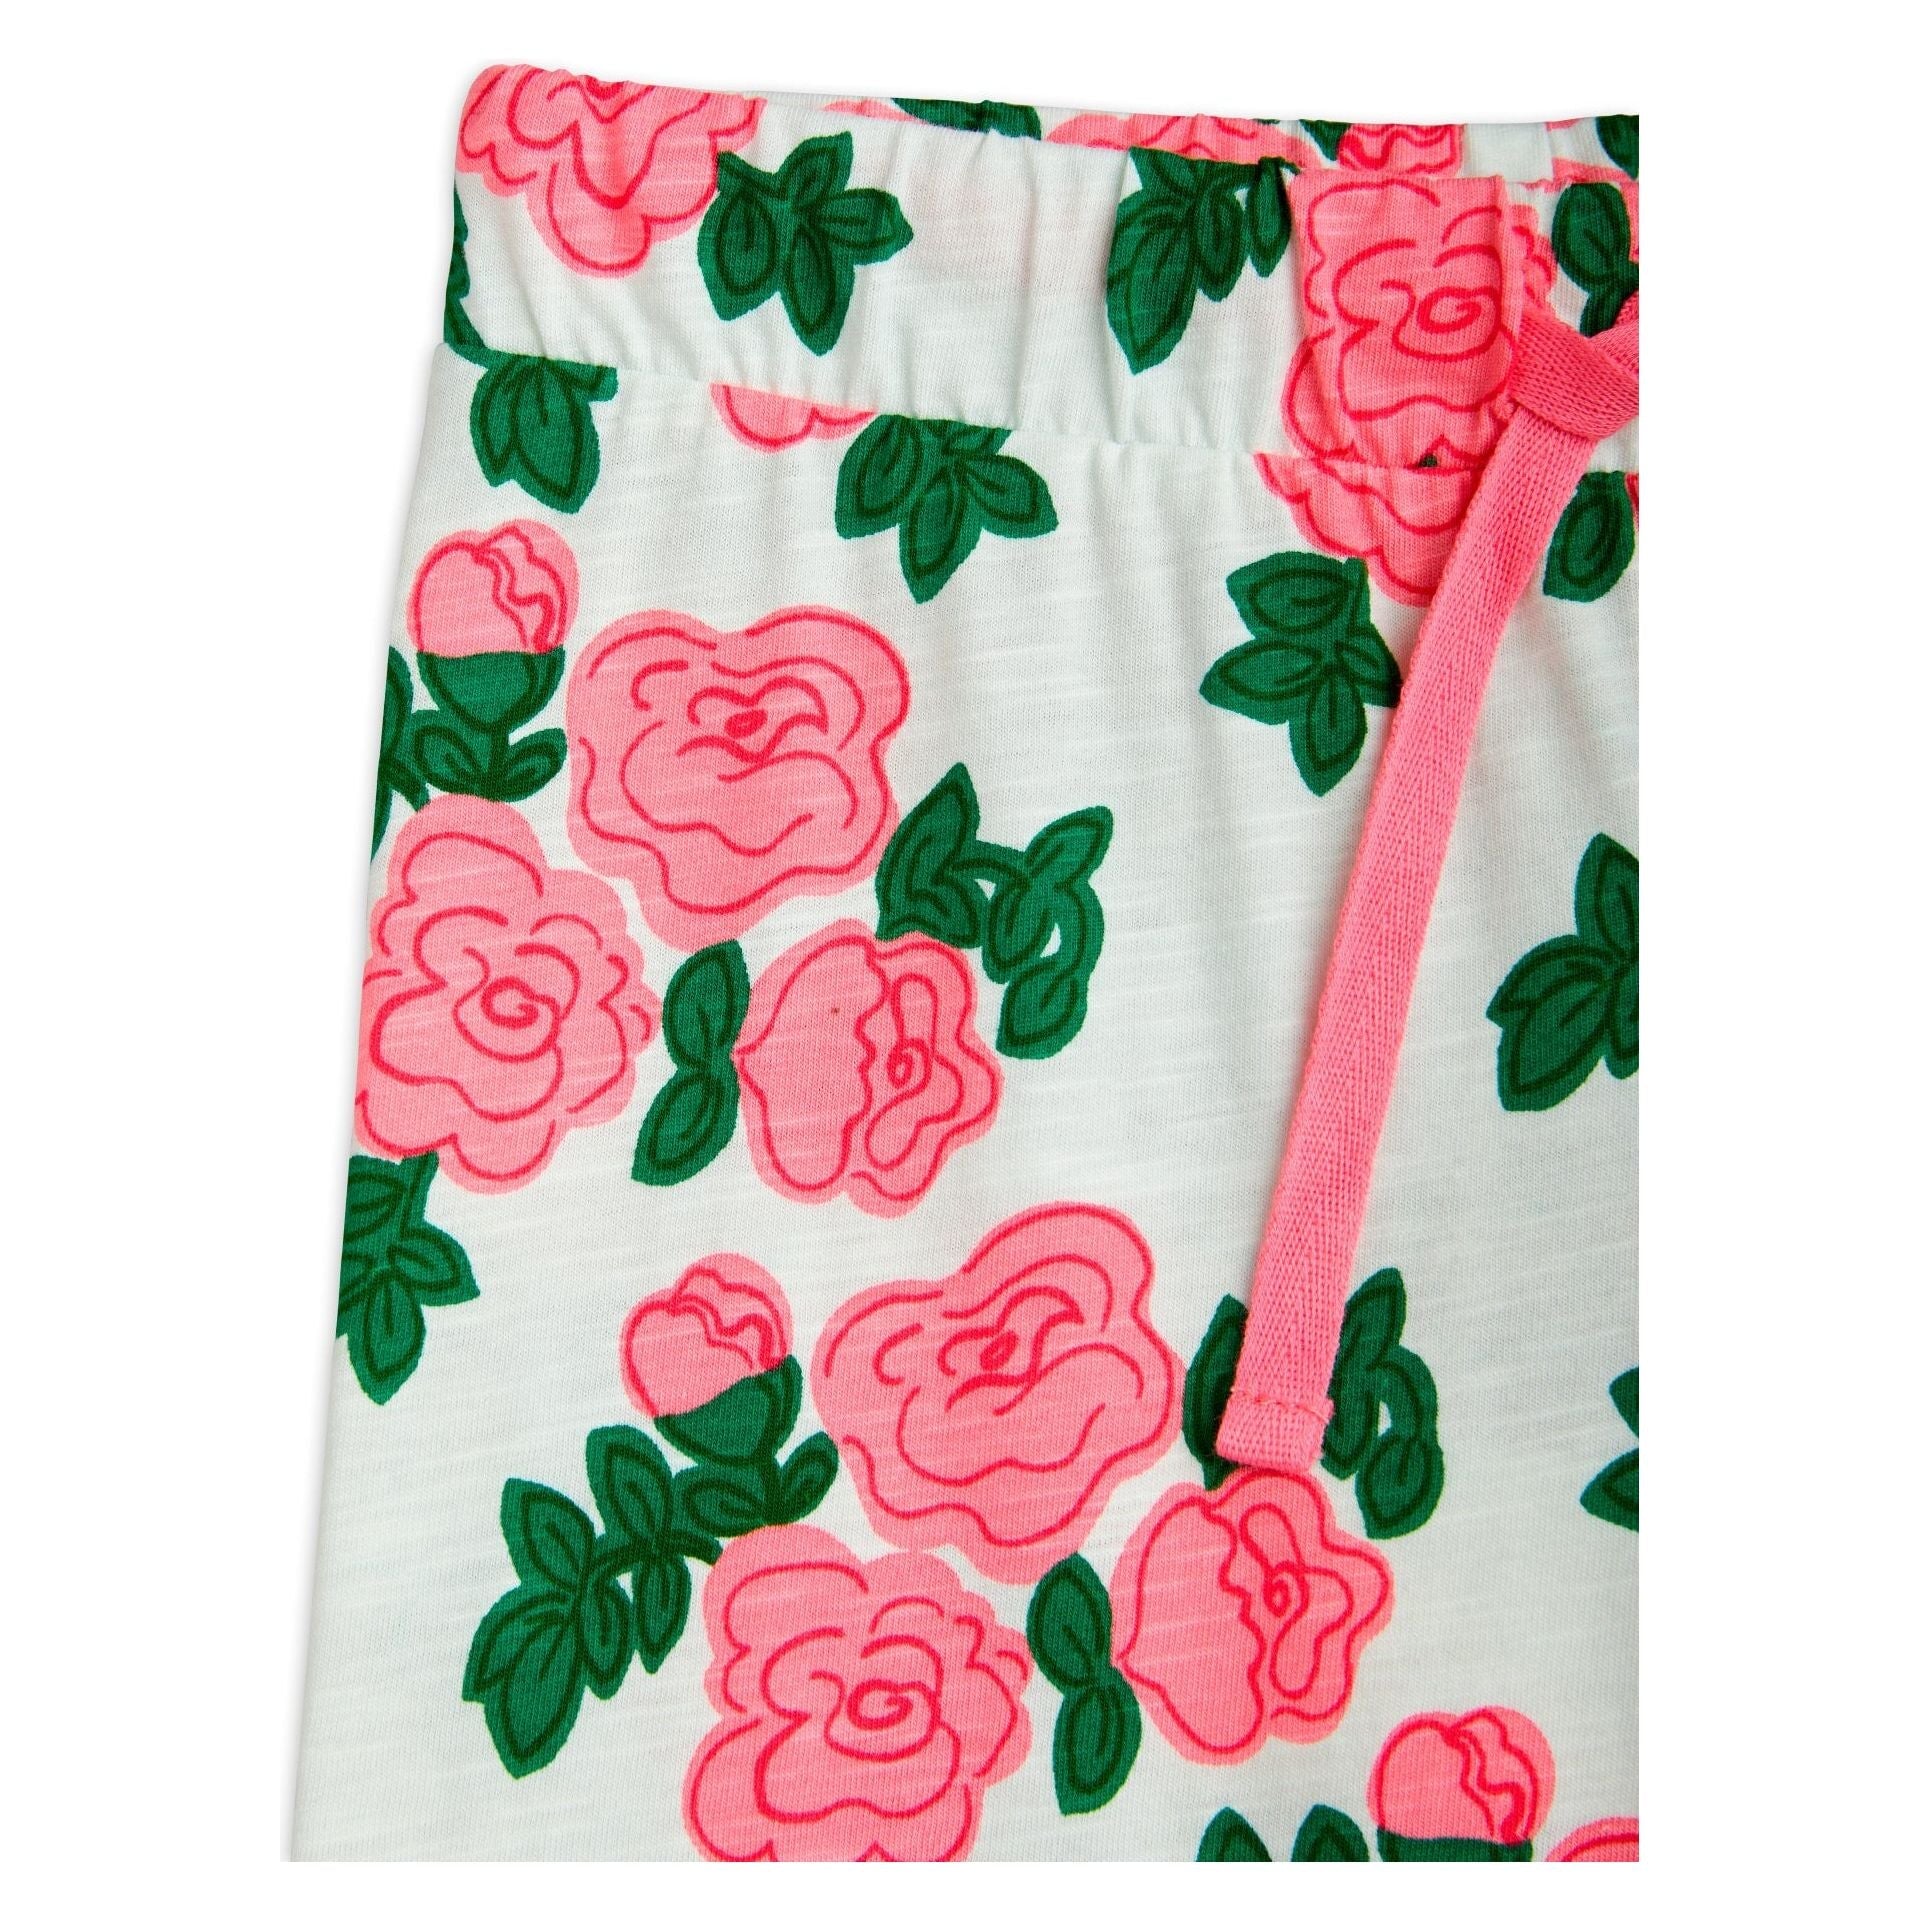 Roses Aop Trousers